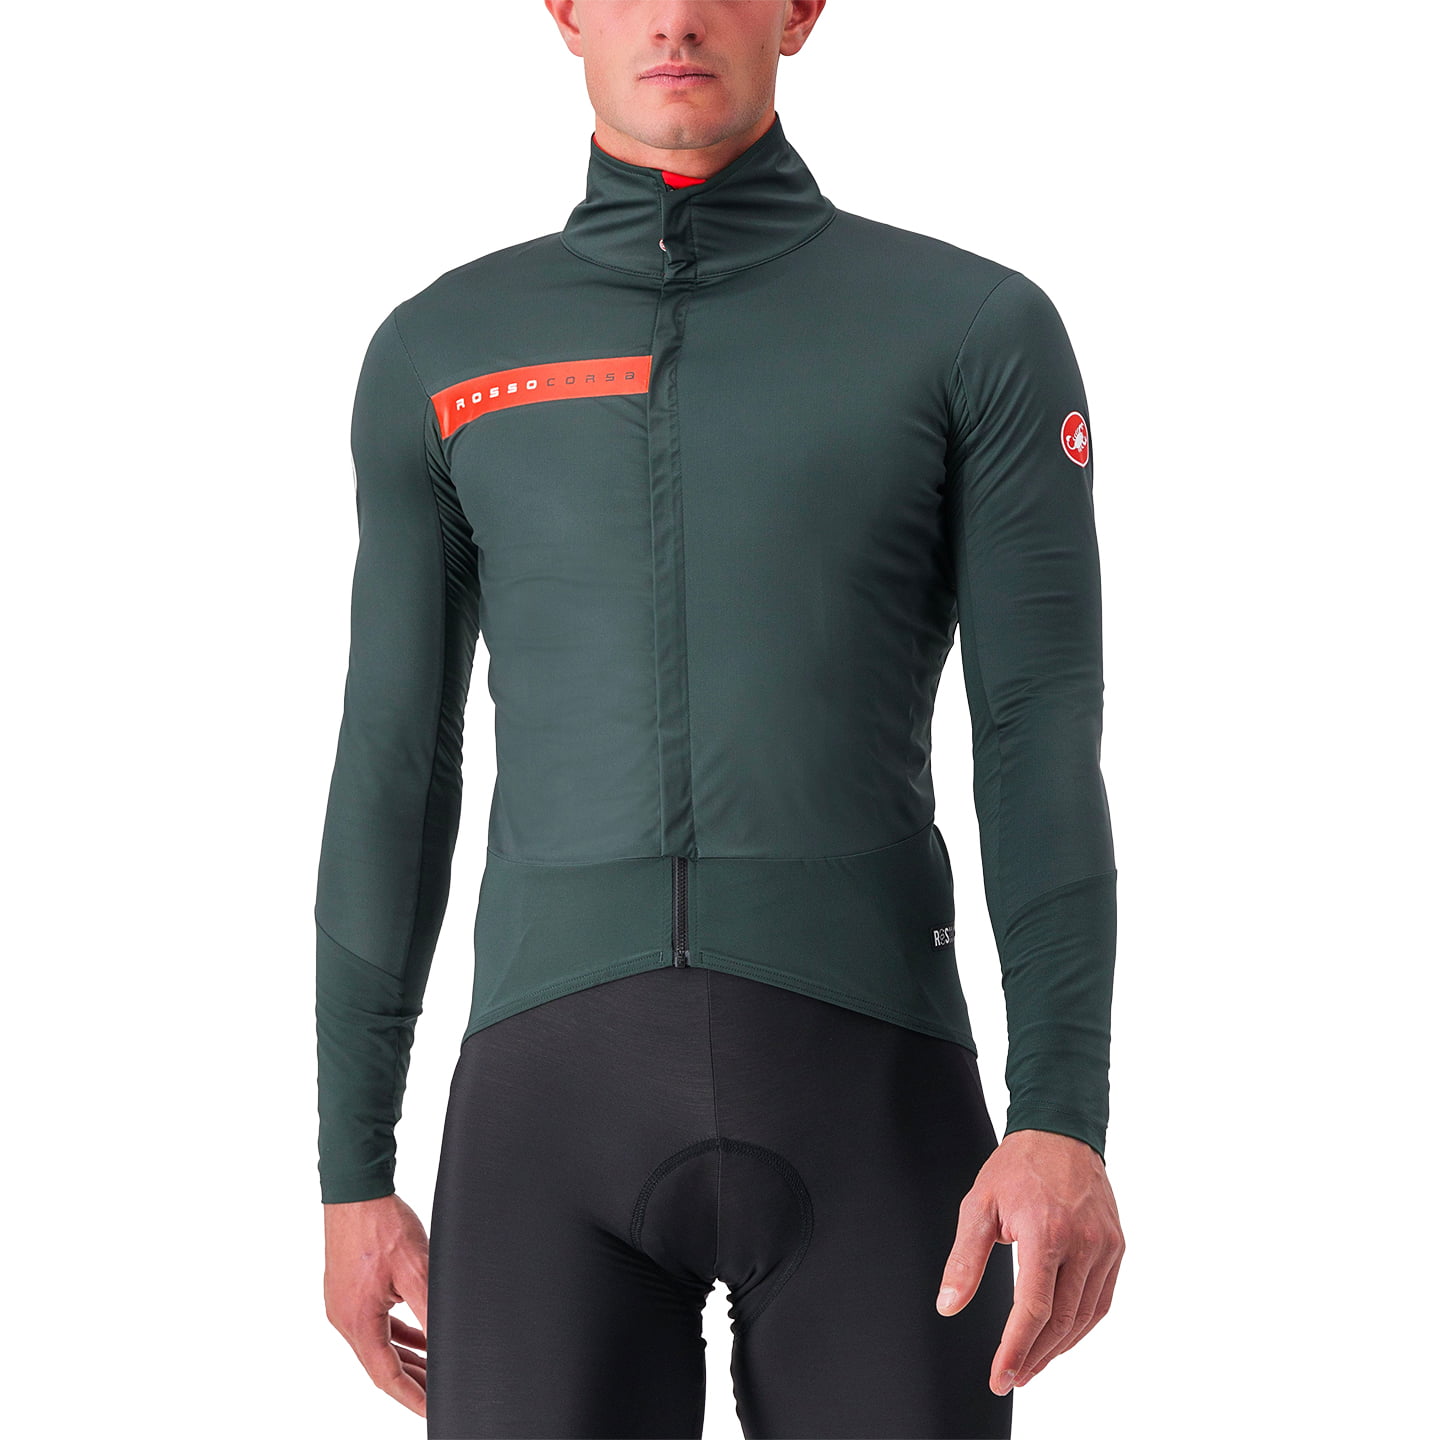 Beta RoS Light Jacket Light Jacket, for men, size 2XL, Cycle jacket, Cycling clothing